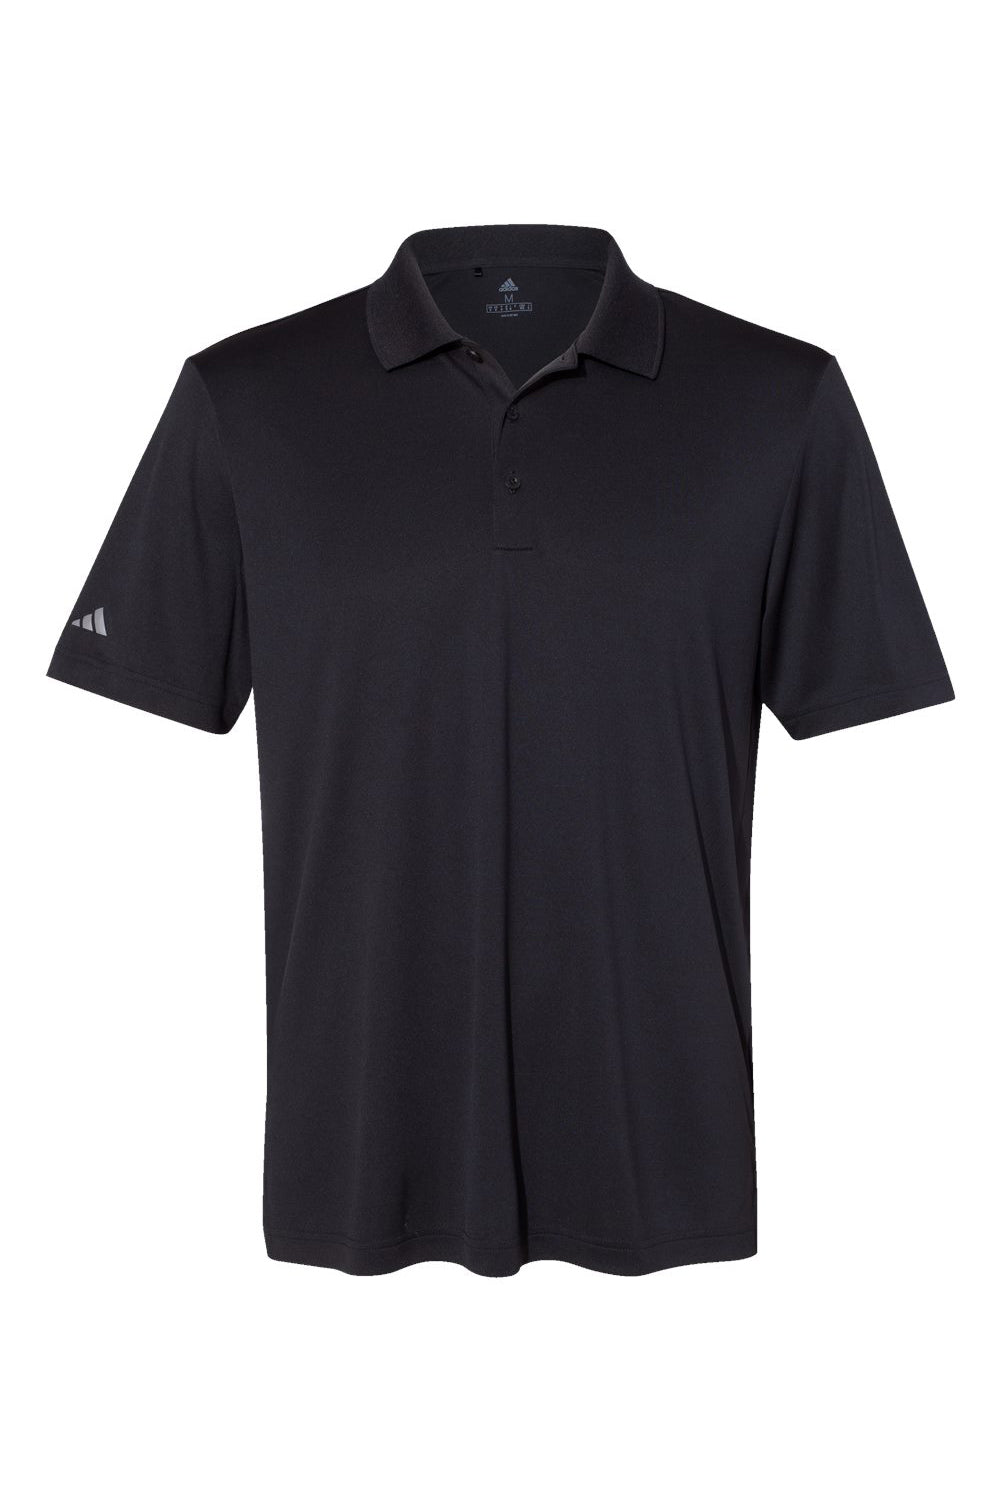 Adidas A230 Mens Performance UPF 50+ Short Sleeve Polo Shirt Black Flat Front